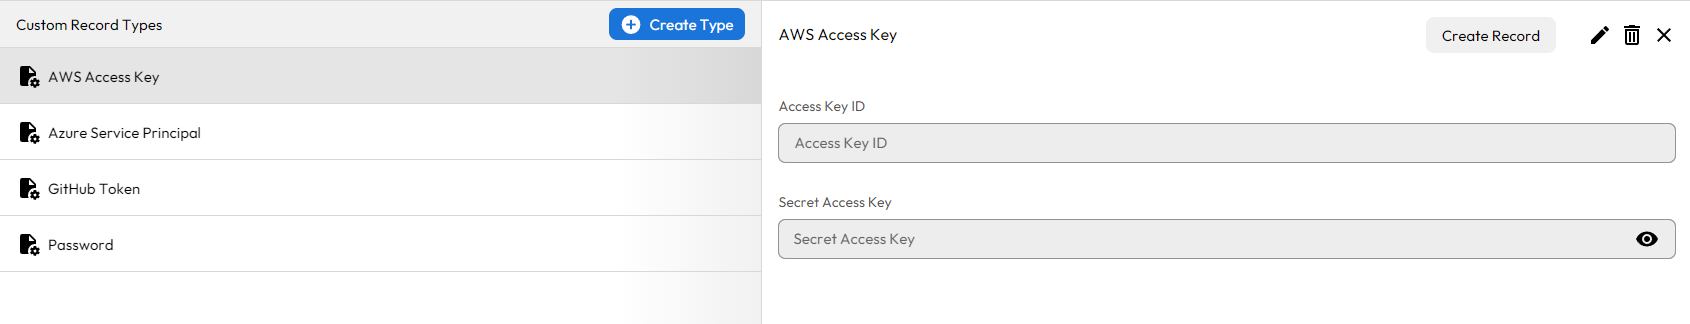 Custom Record for AWS Access Key